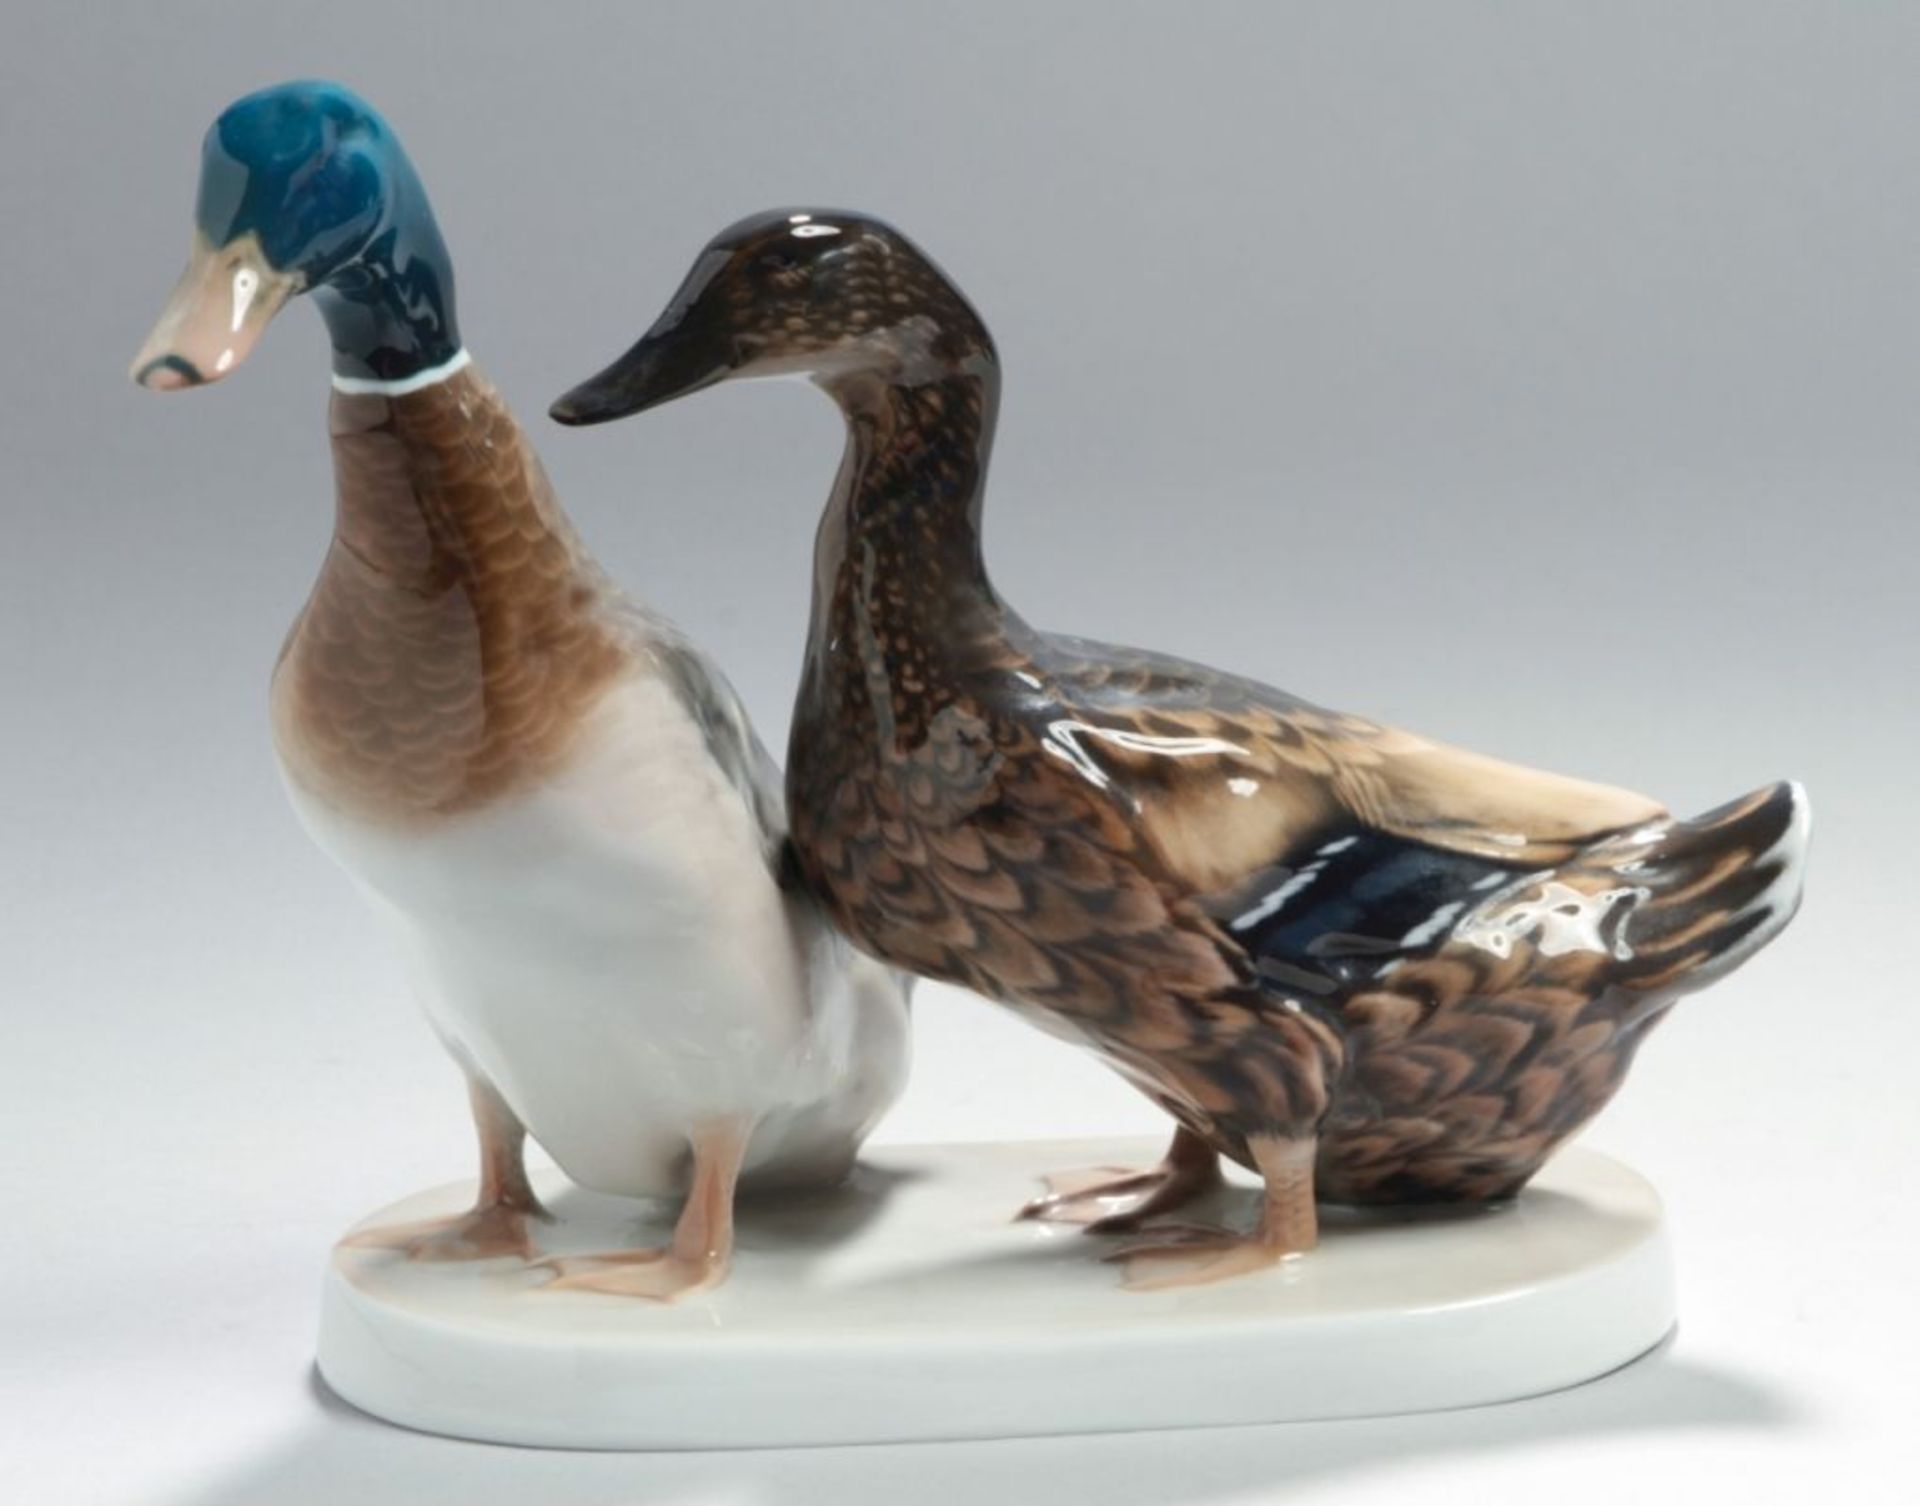 Porzellan-Tierplastik, "Entenpaar", Rosenthal, Classic Rose Collection, nach 1974, Entw.:Willy